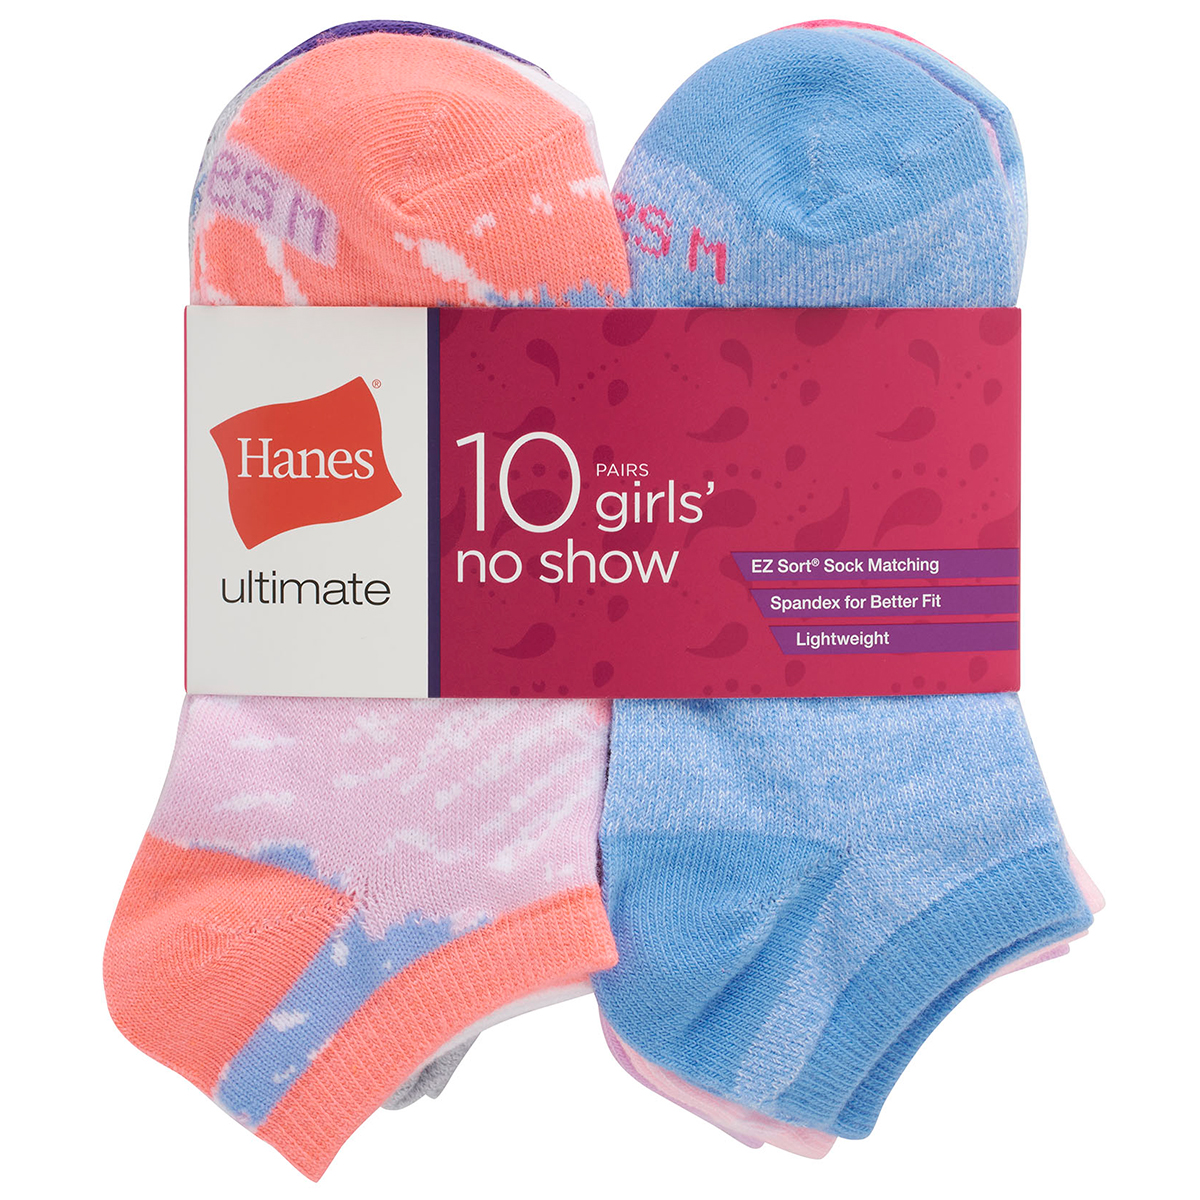 Hanes Girls' Ultimate No-Show Socks, 10 Pack, Various Patterns